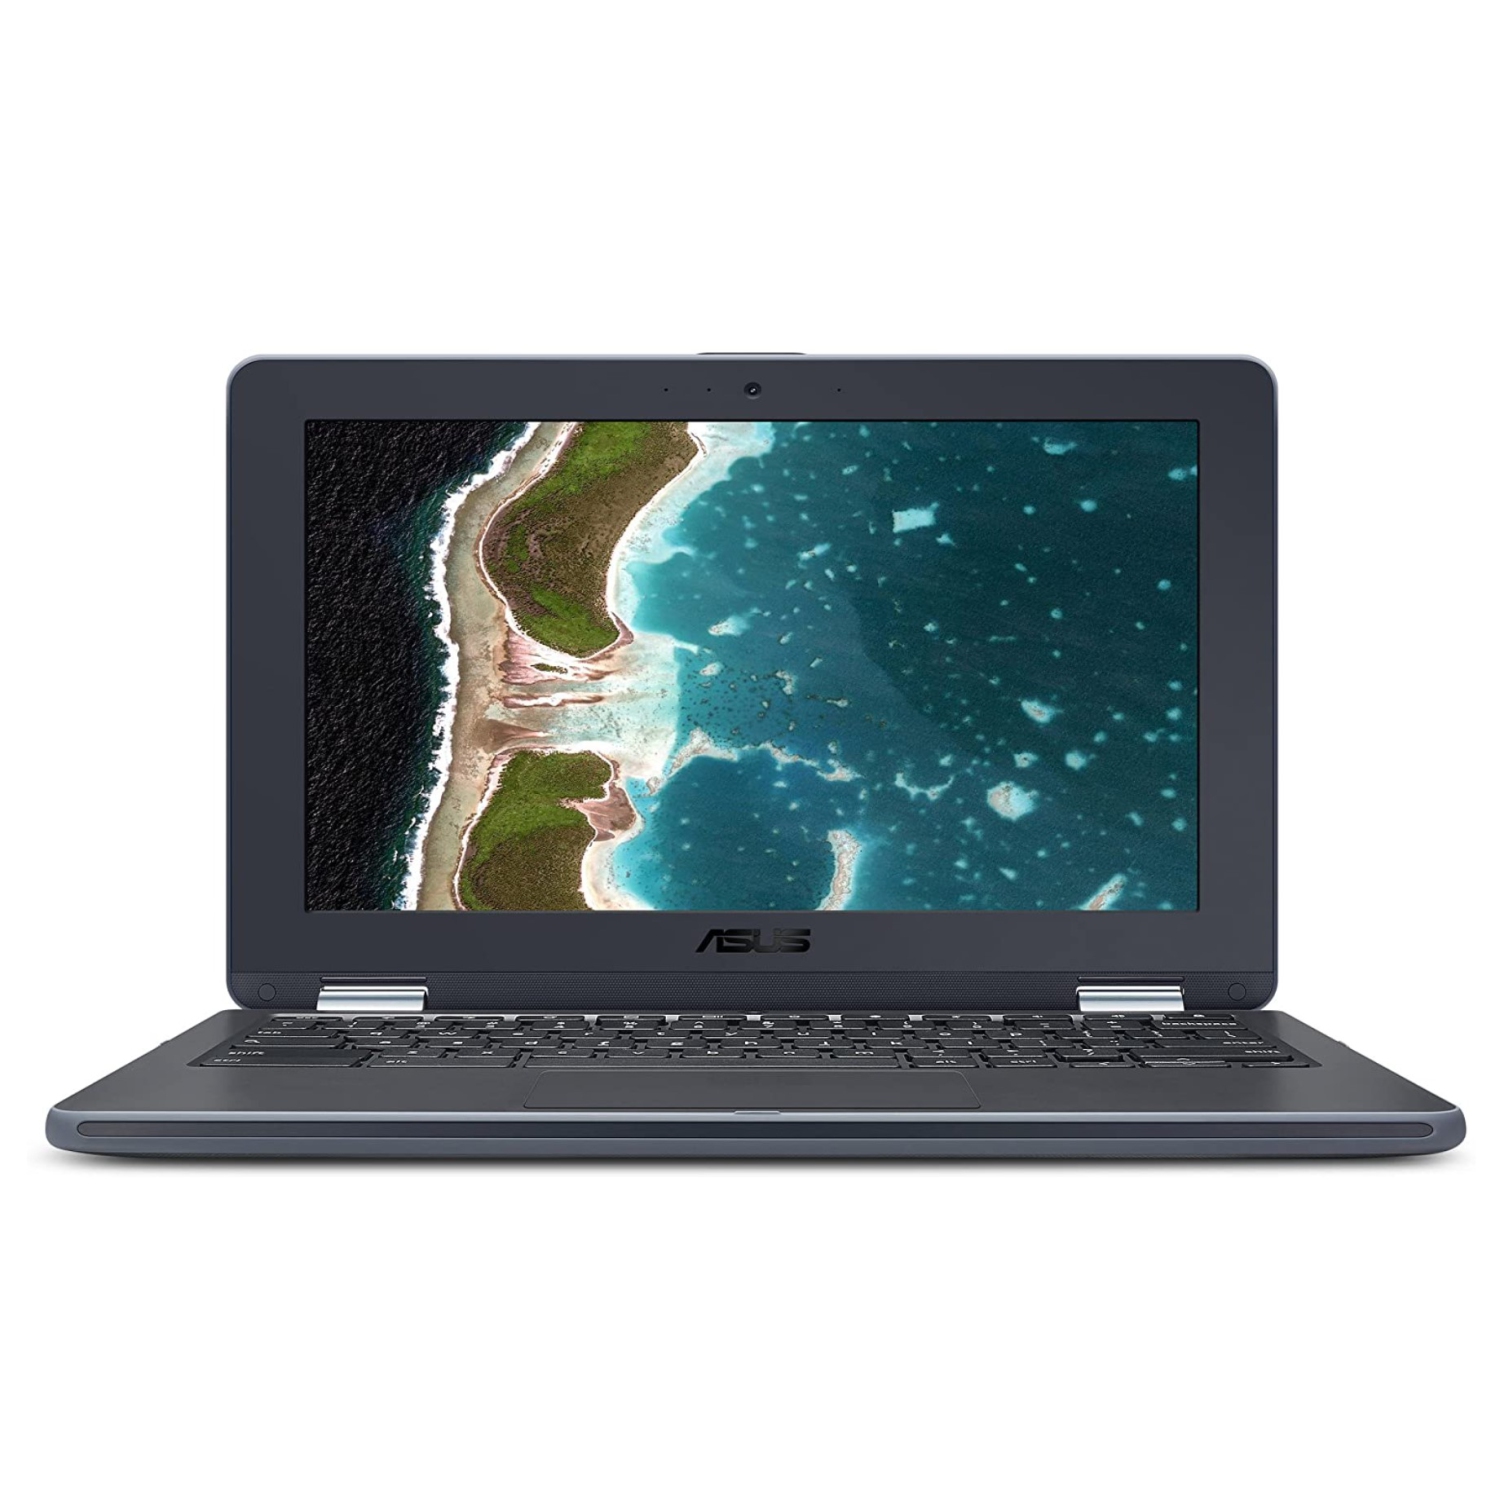 Refurbished (Good) - Asus Chromebook C213SA, 11.6 LED Flip, Touchscreen, Intel Celeron N3350 Dual Core 1.1 GHz, 4GB RAM, 32GB SSD, Bluetooth 4.1, Webcam, Chrome OS